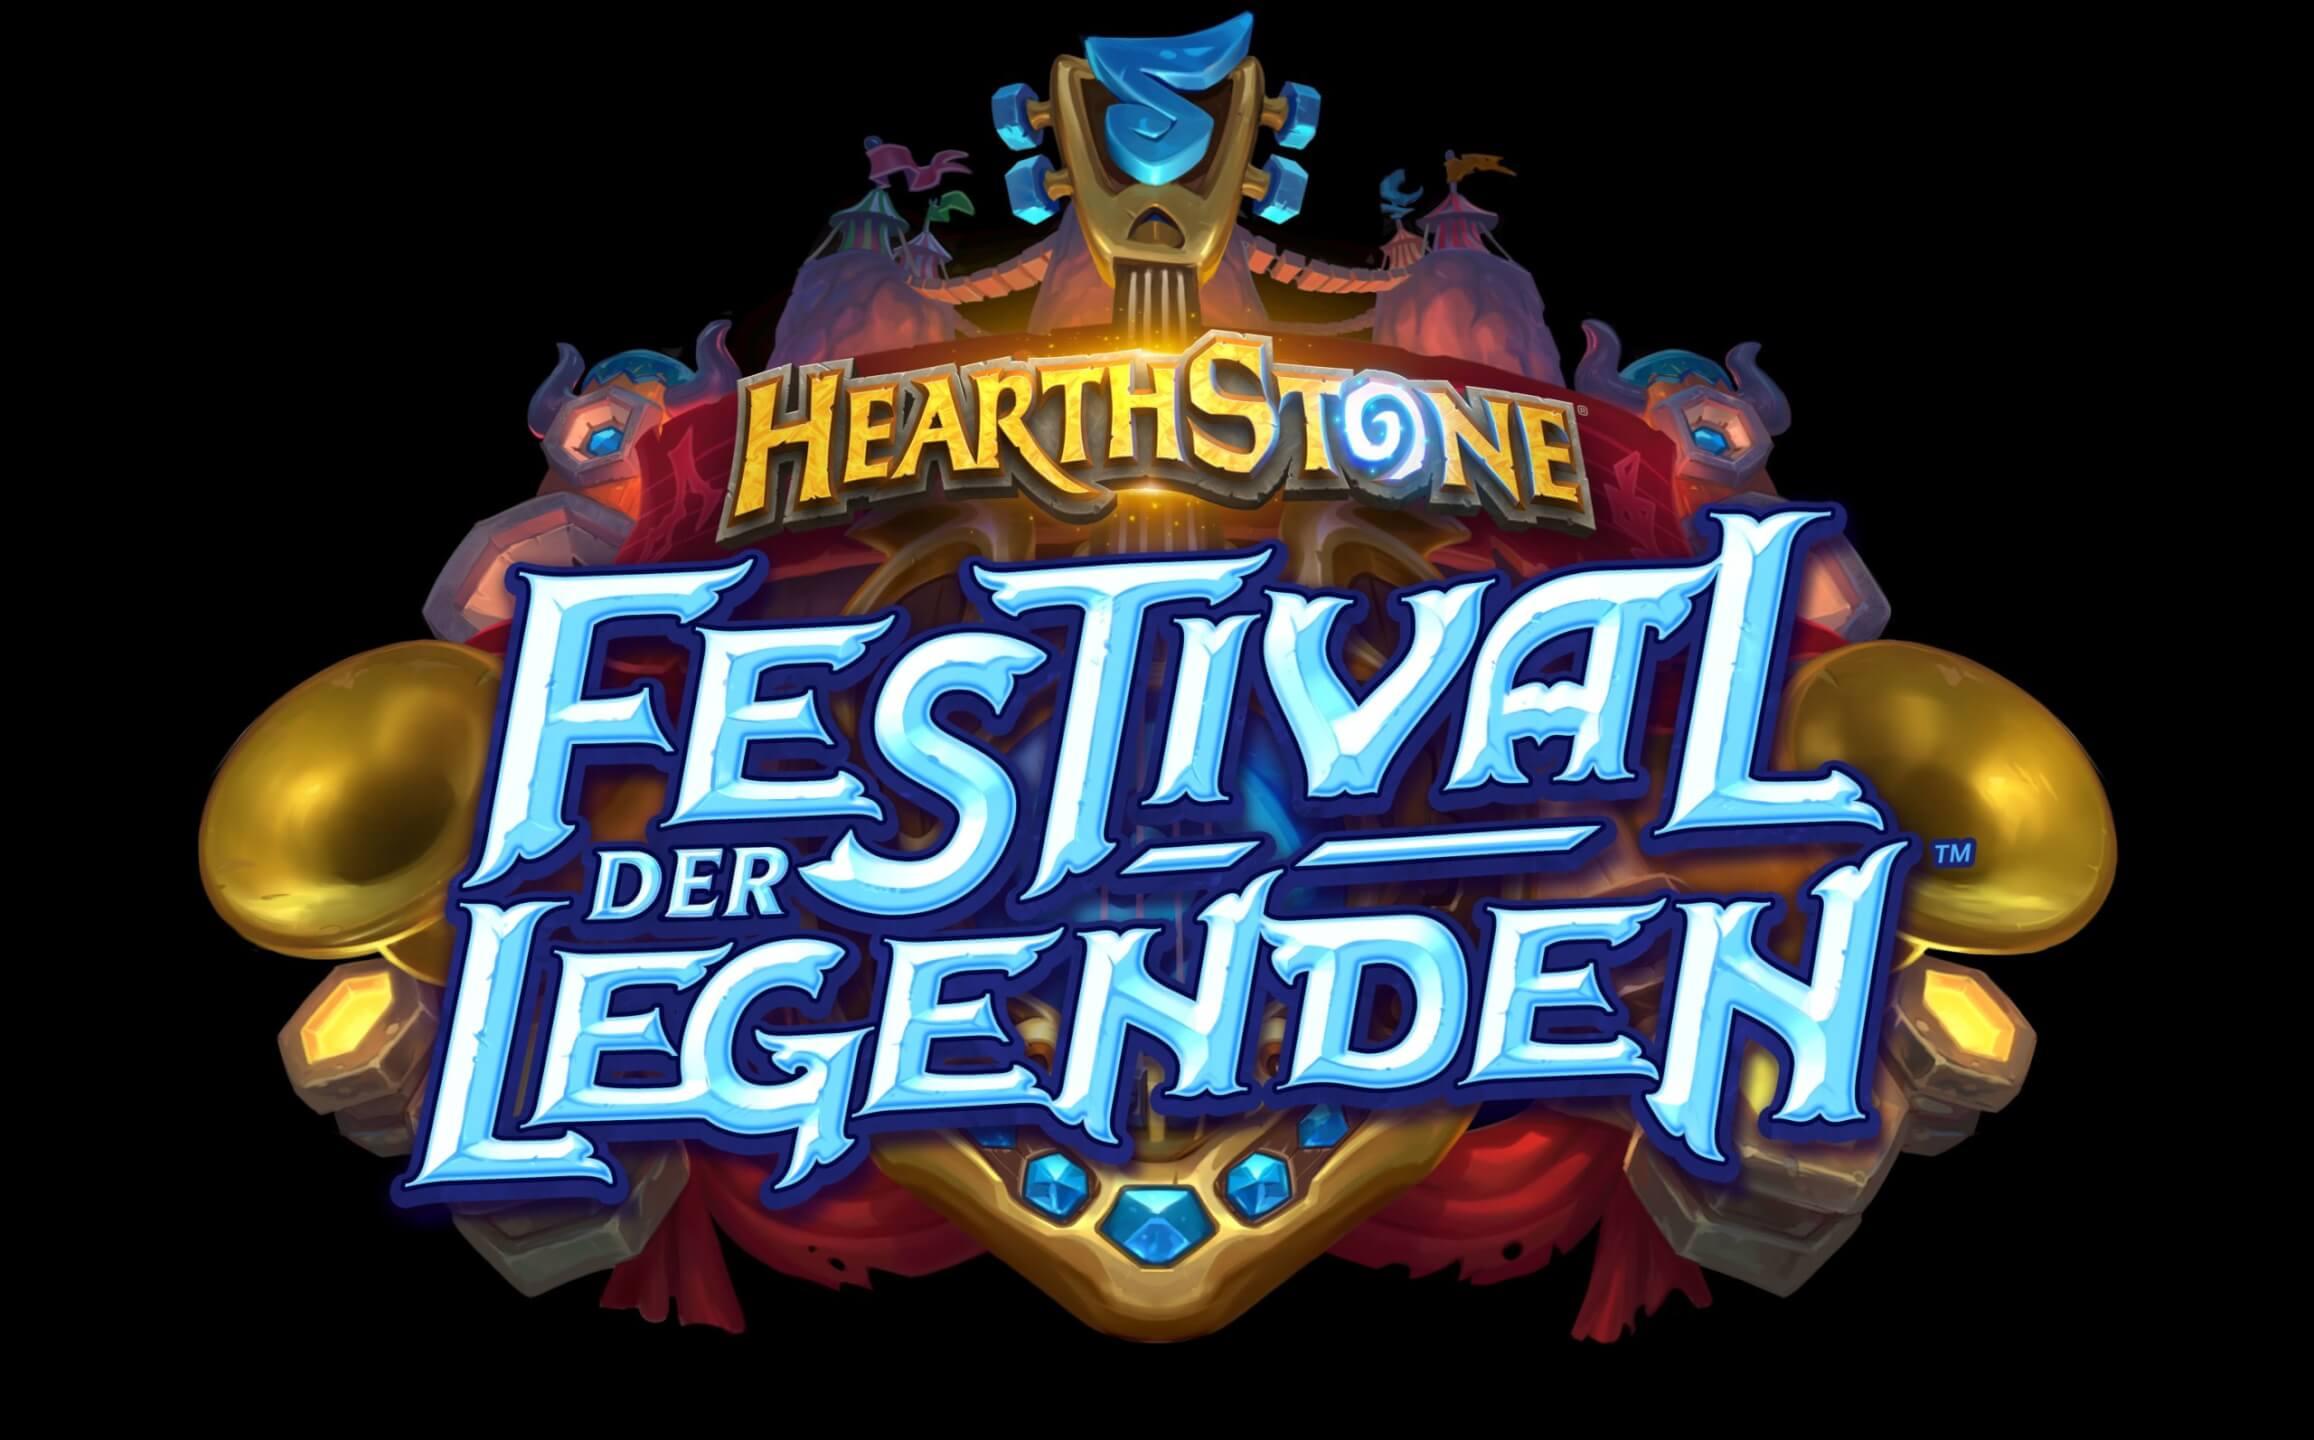 Hearthstone Festival der Legenden